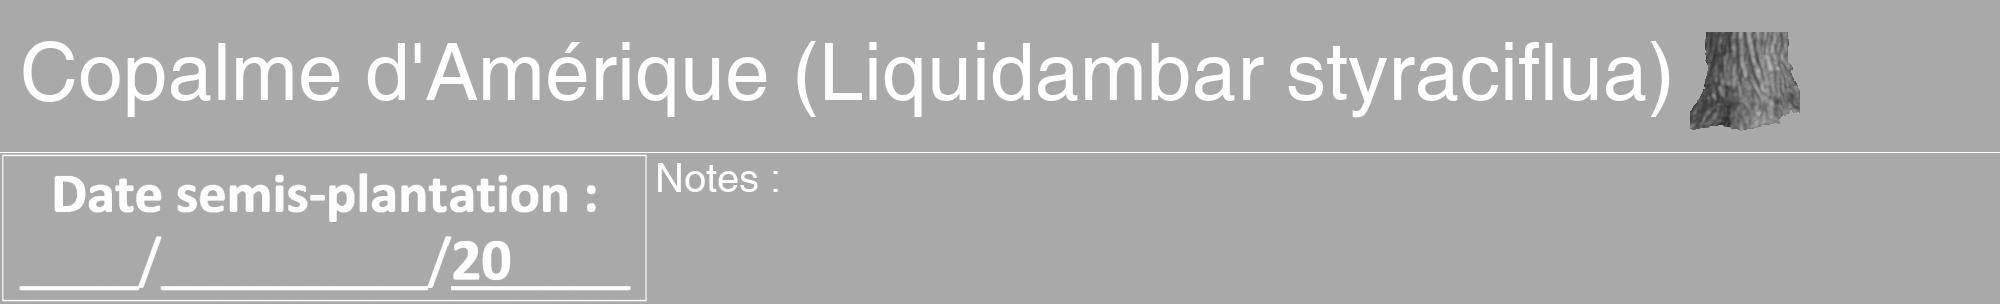 Étiquette de : Liquidambar styraciflua - format a - style blanche13hel avec comestibilité simplifiée